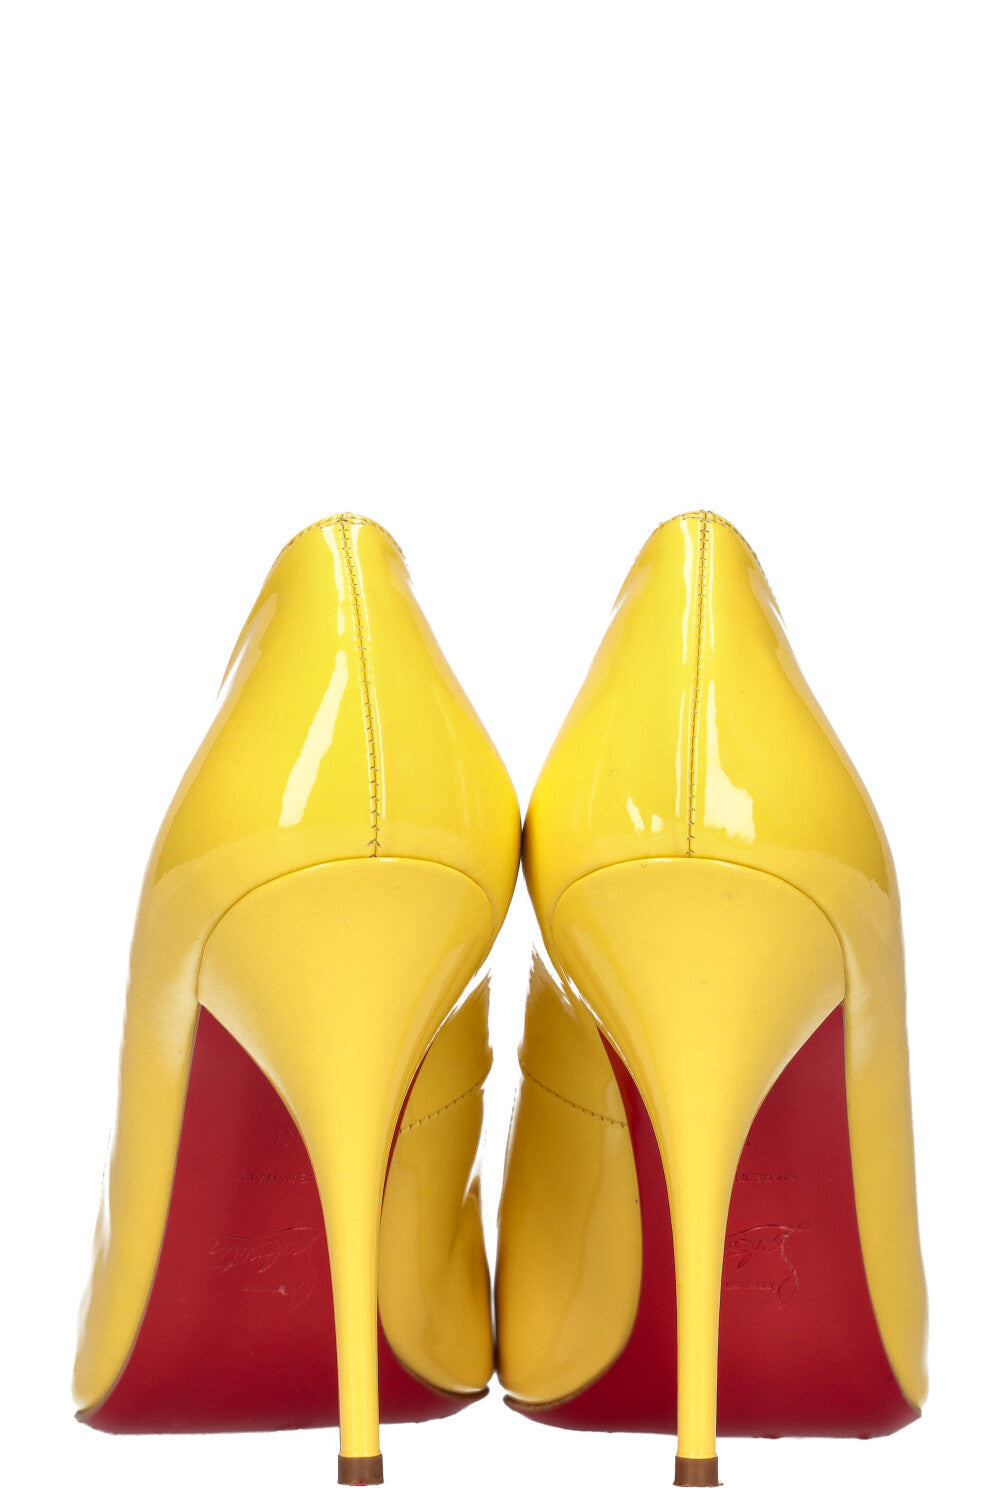 CHRISTIAN LOUBOUTIN High Heels Patent Yellow